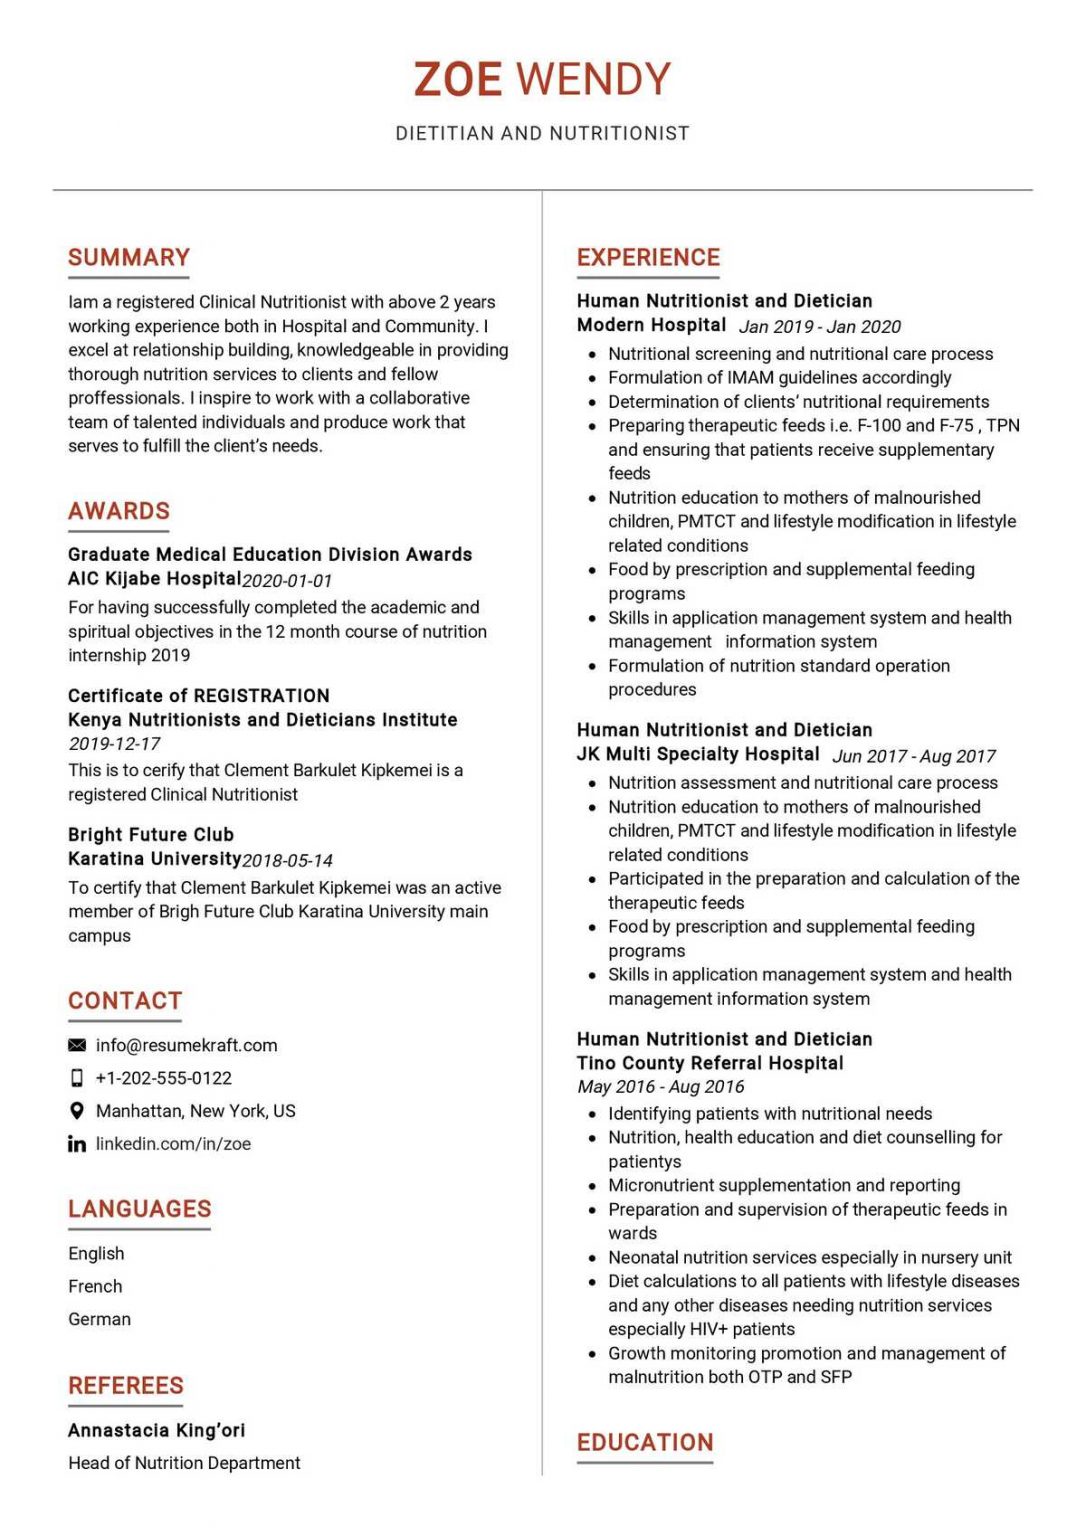 400+ Professional Resume Samples for 2021 | ResumeKraft